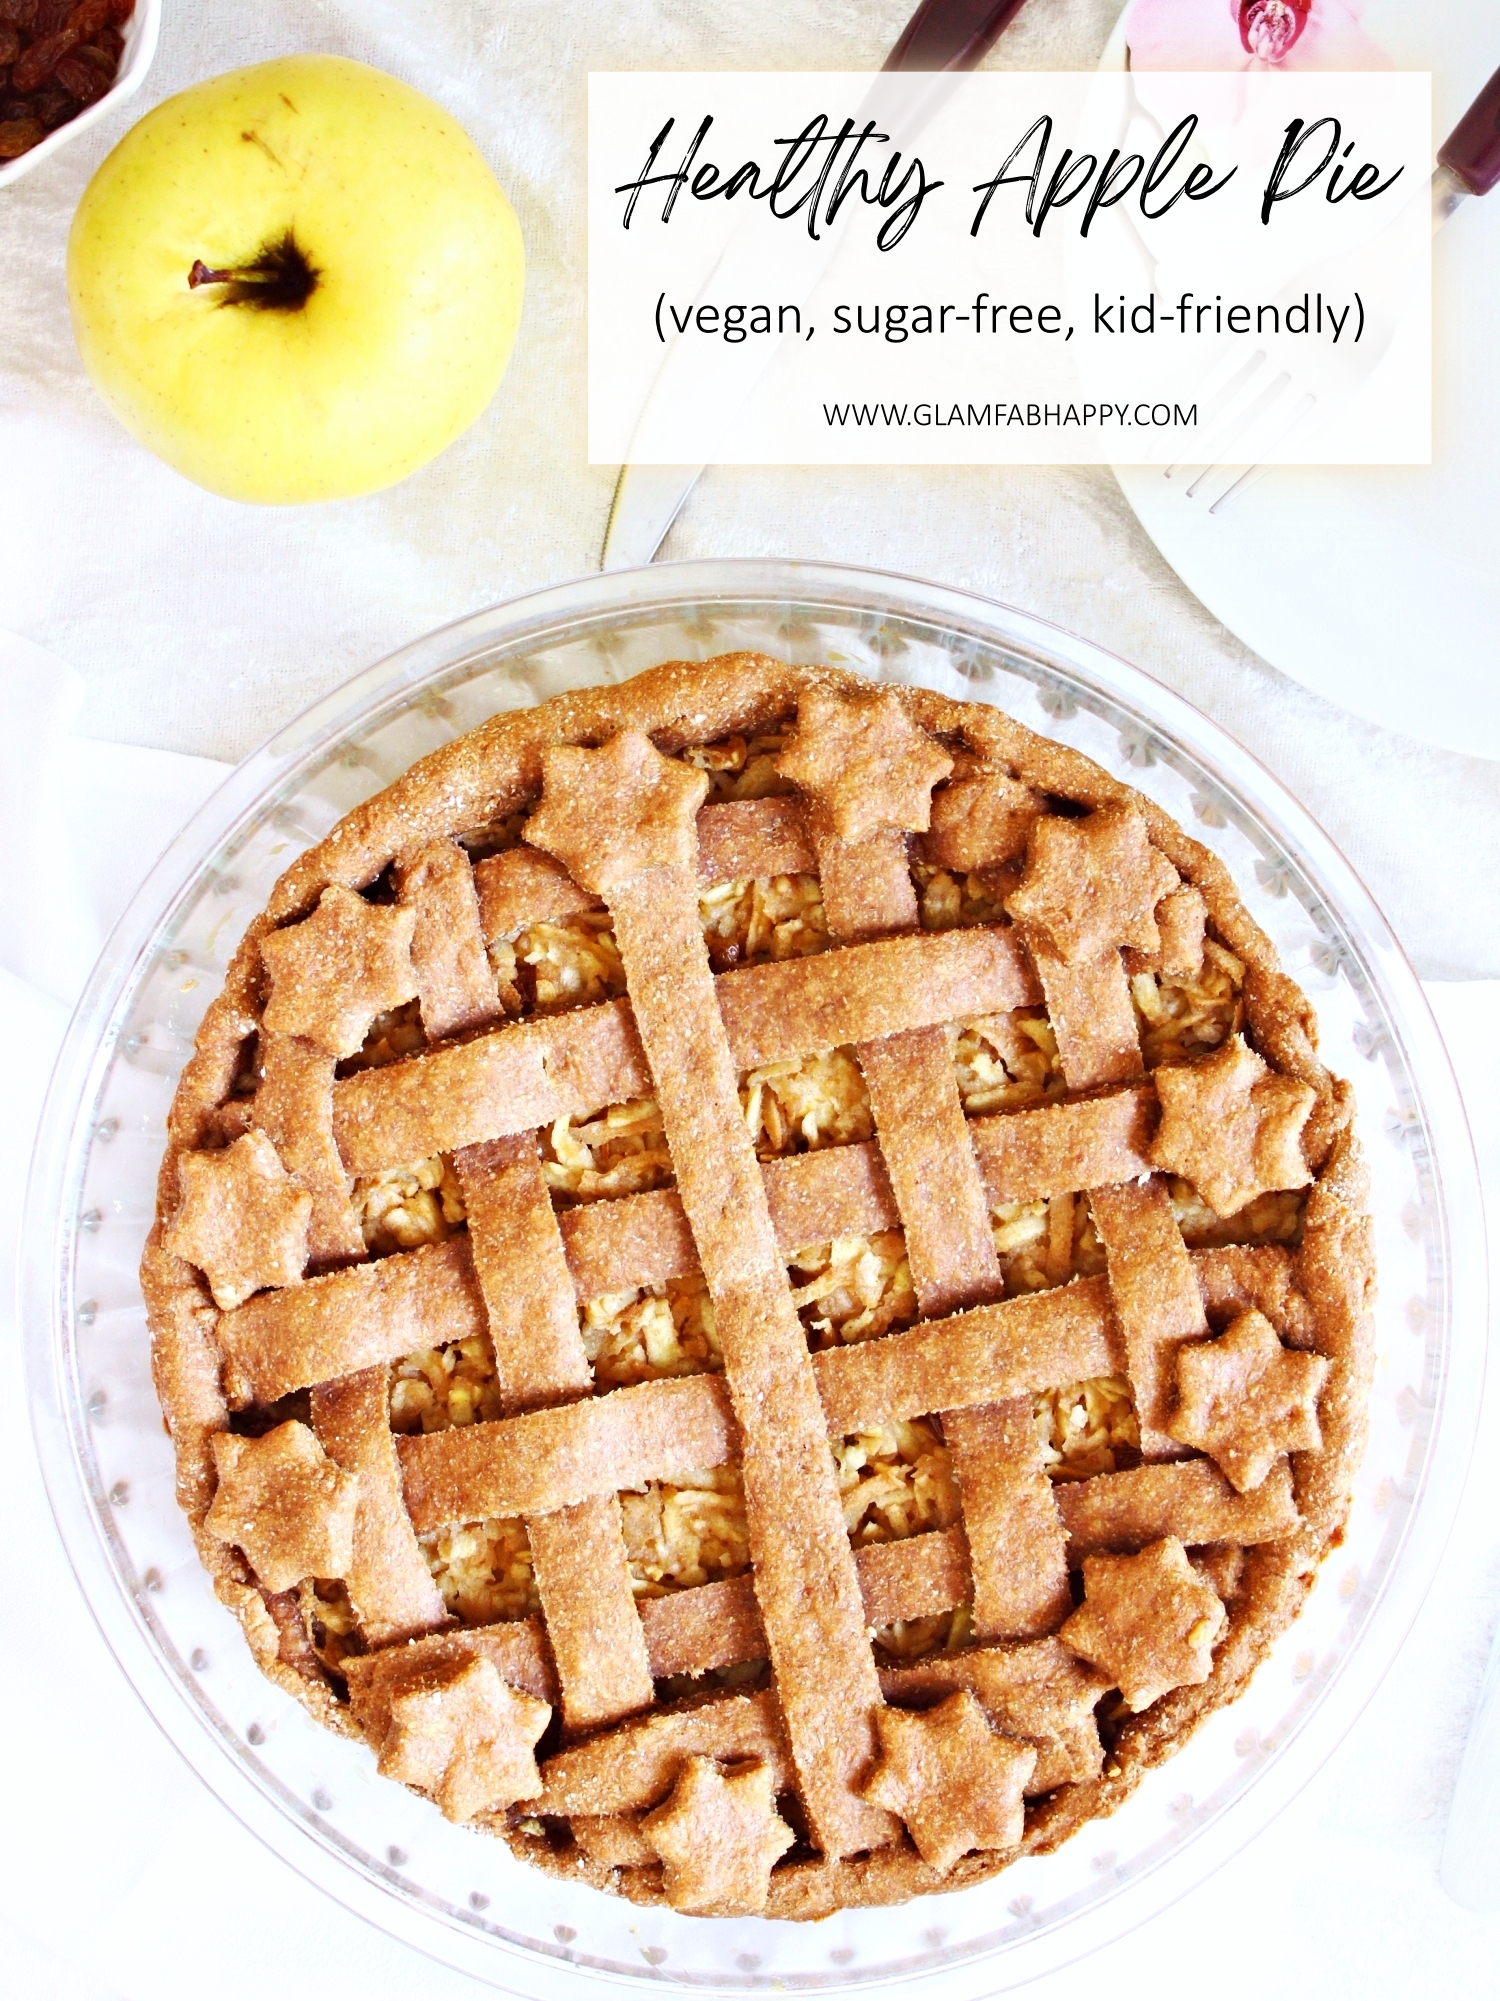 HEALTHY APPLE PIE vegan sugar-free low-fat kid-friendly recipe, healthy pie for whole family